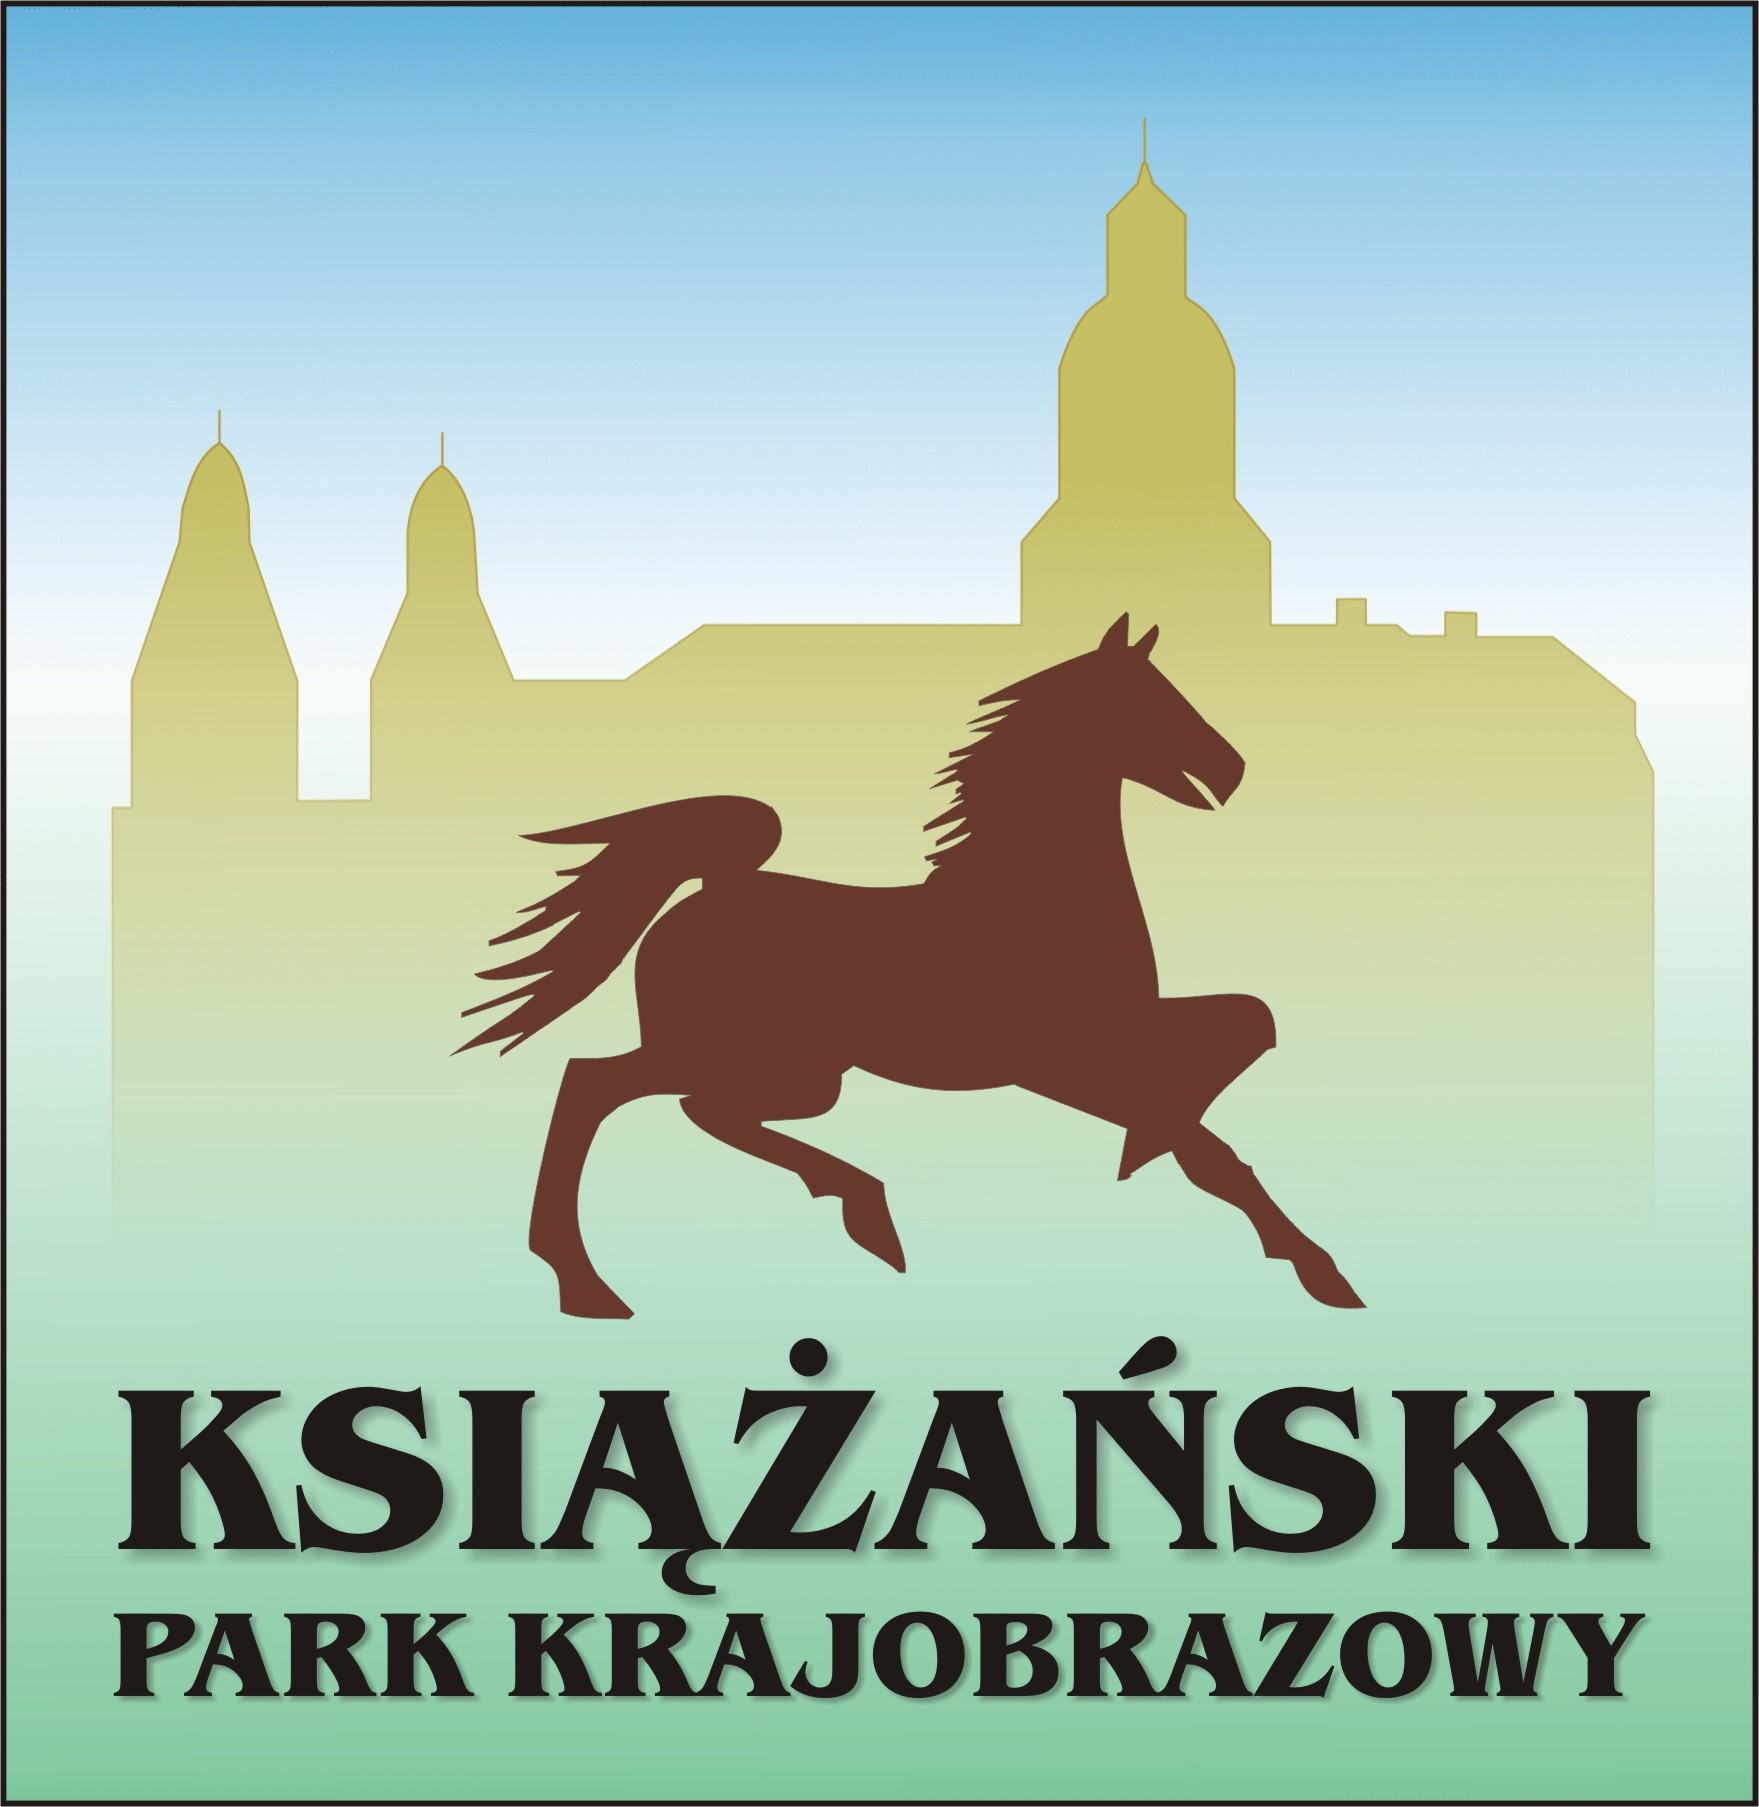 The Książ Landscape Park